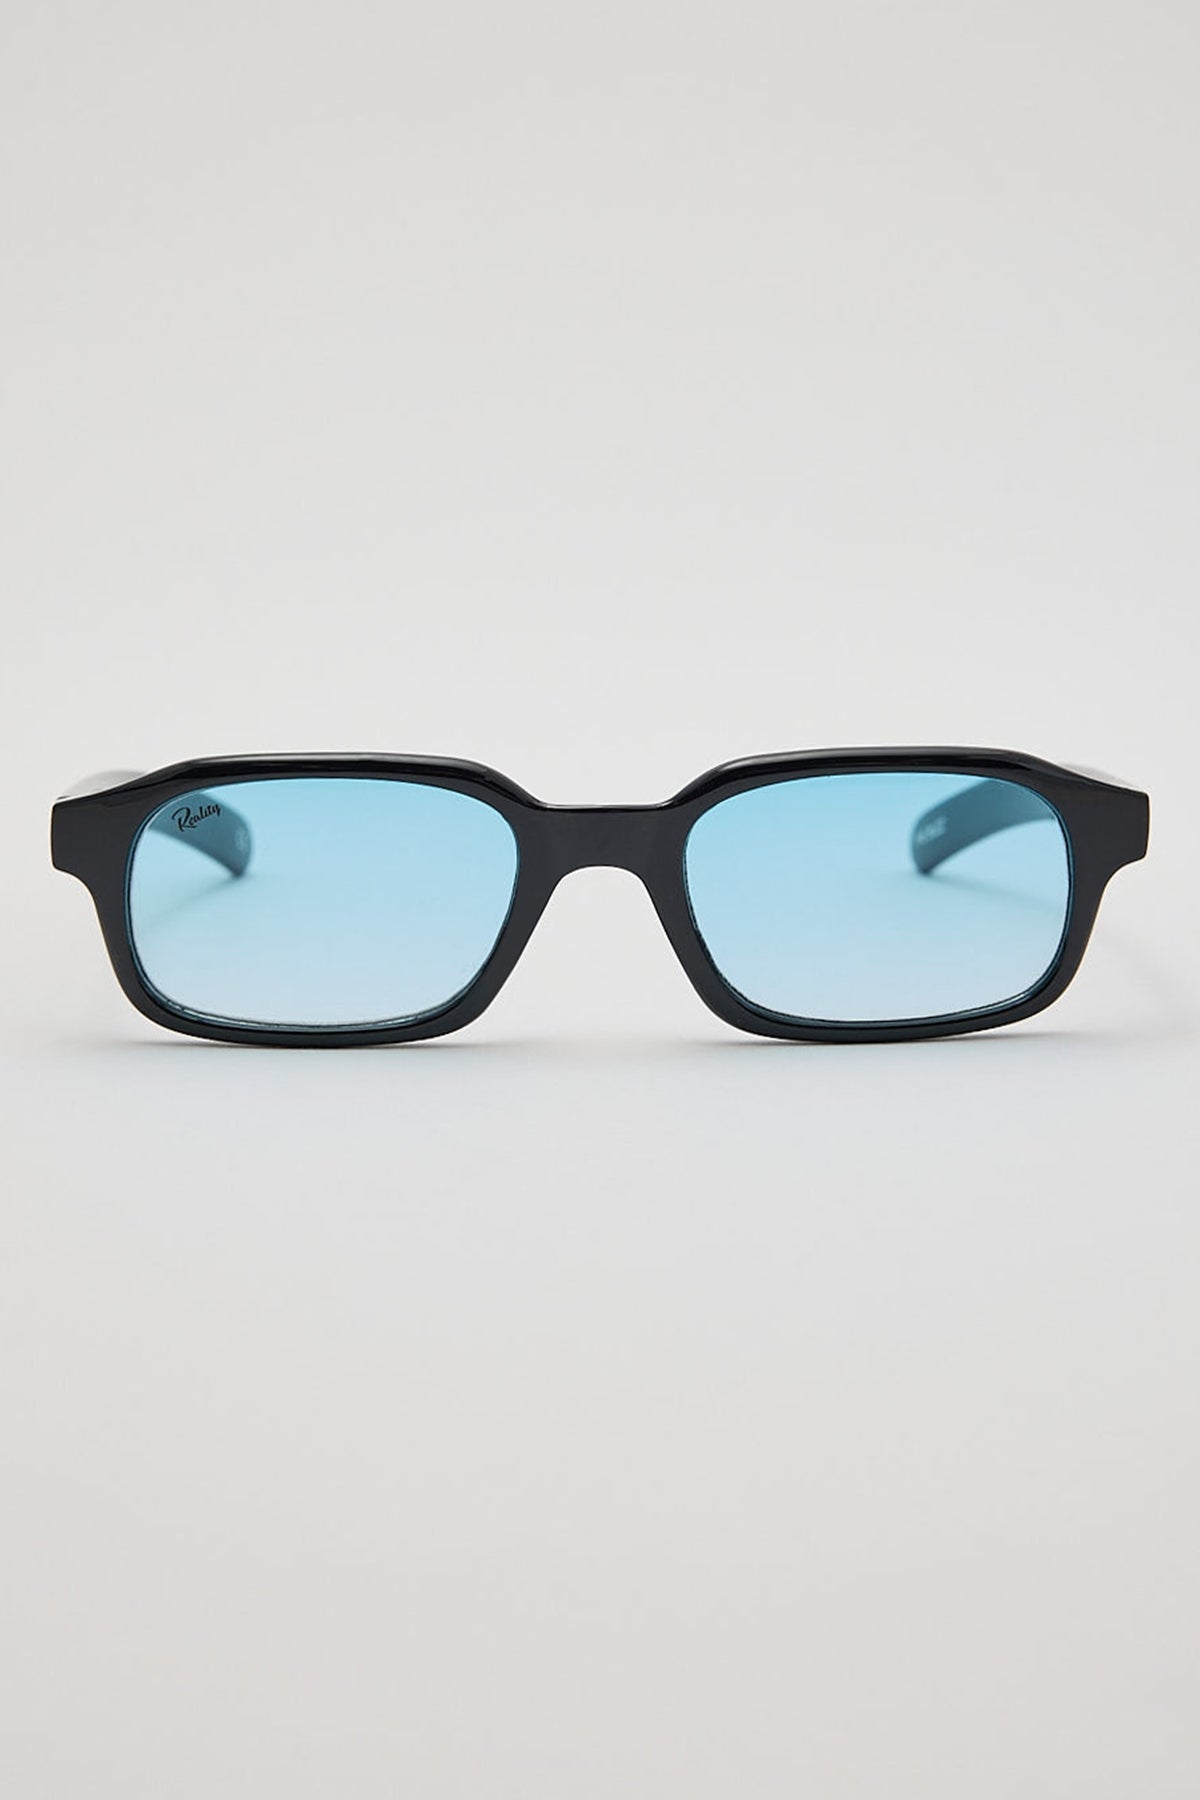 Reality Eyewear The Buzz Black/Aqua